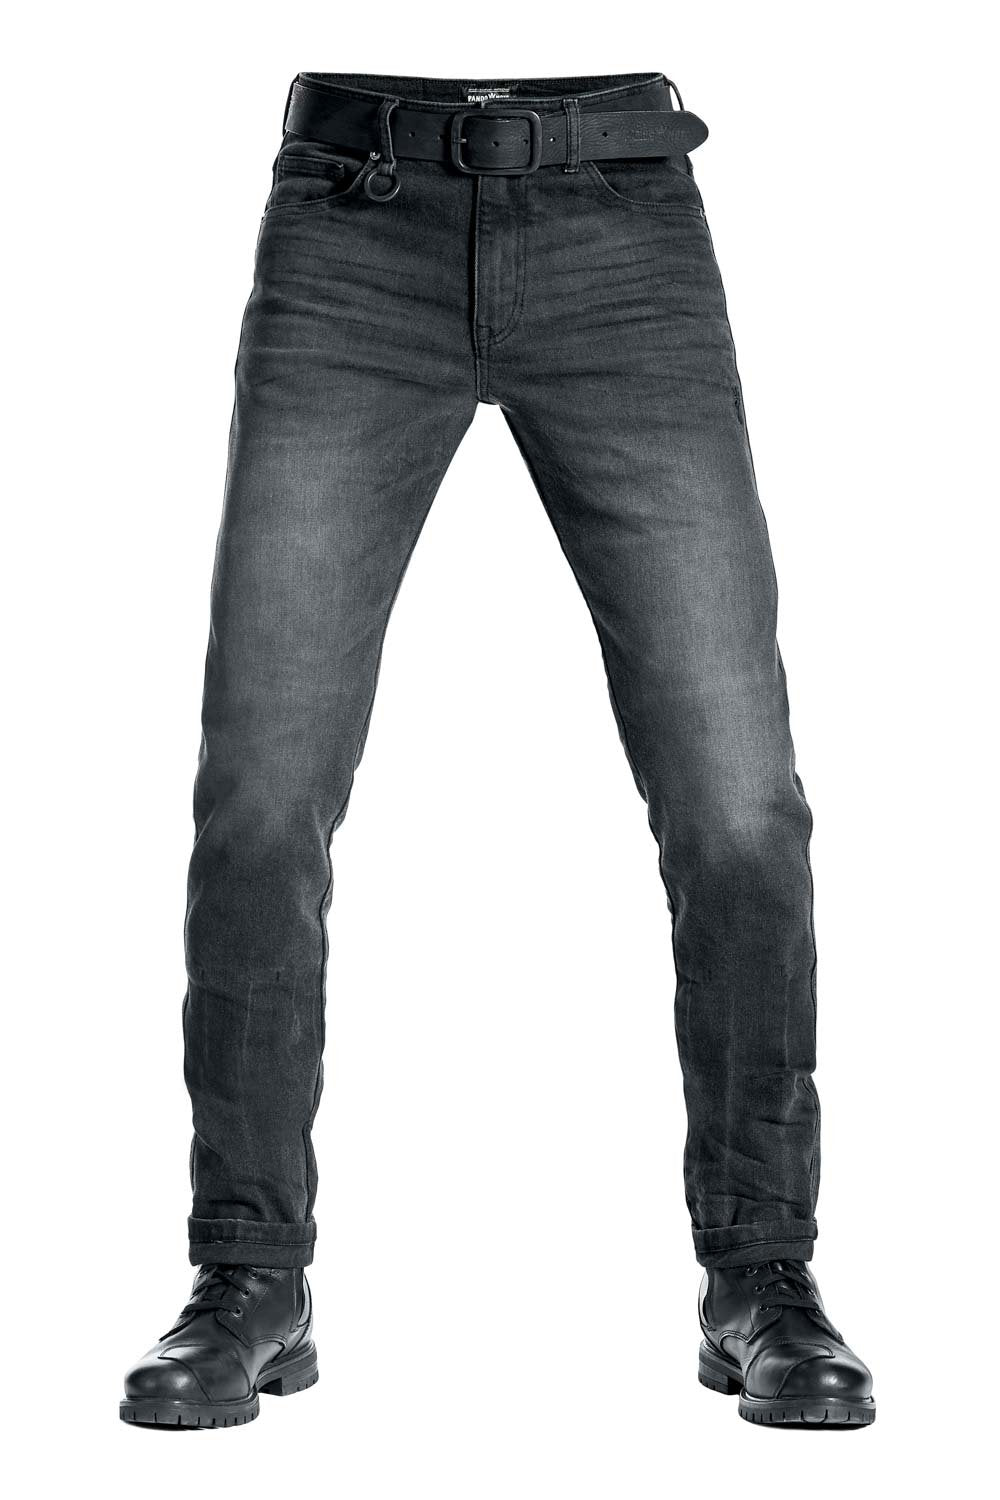 Pando Moto ROBBY COR 01 Jeans